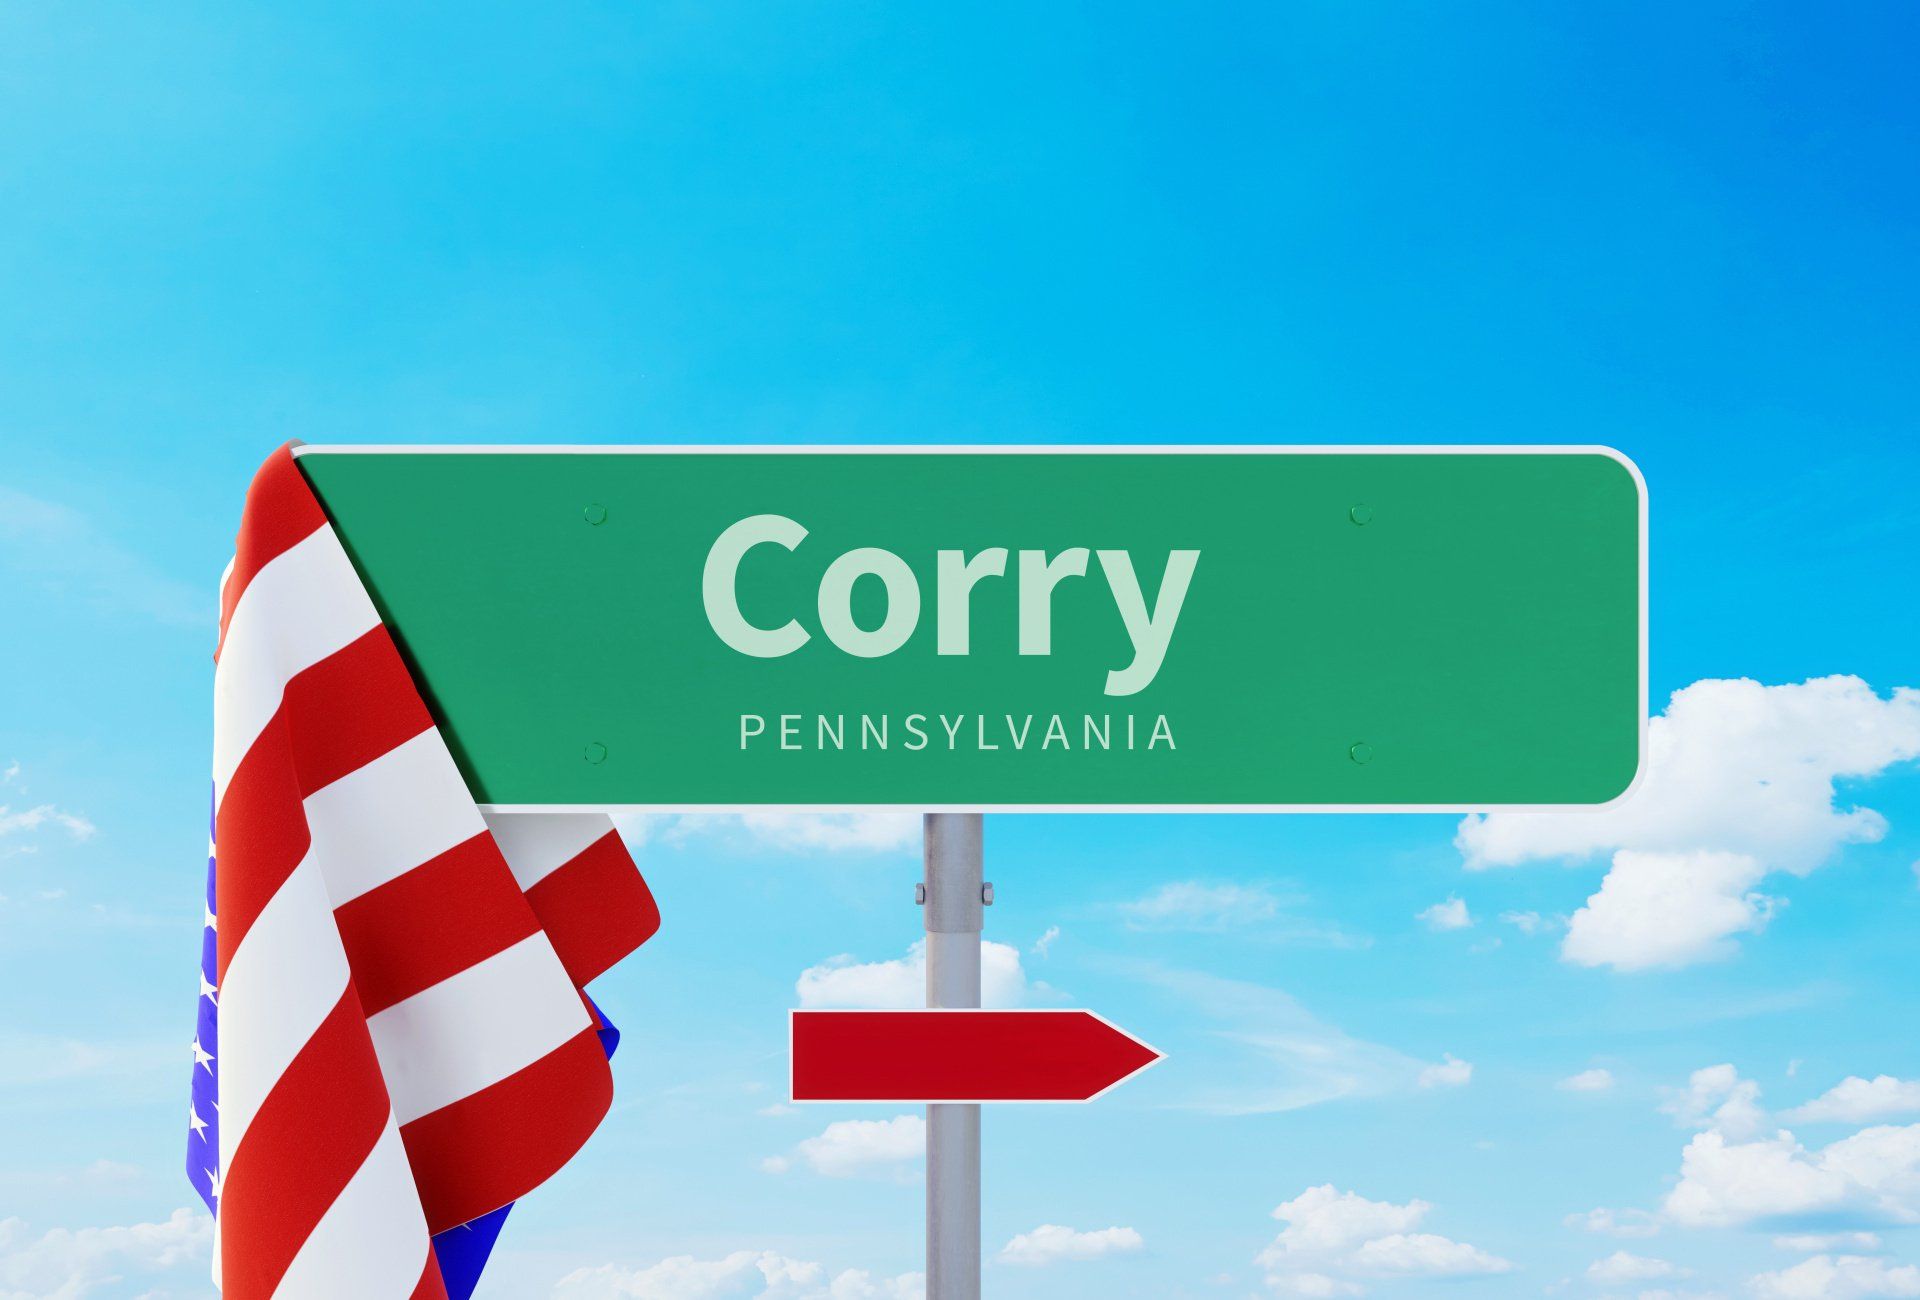 Corry Pennsylvania sign